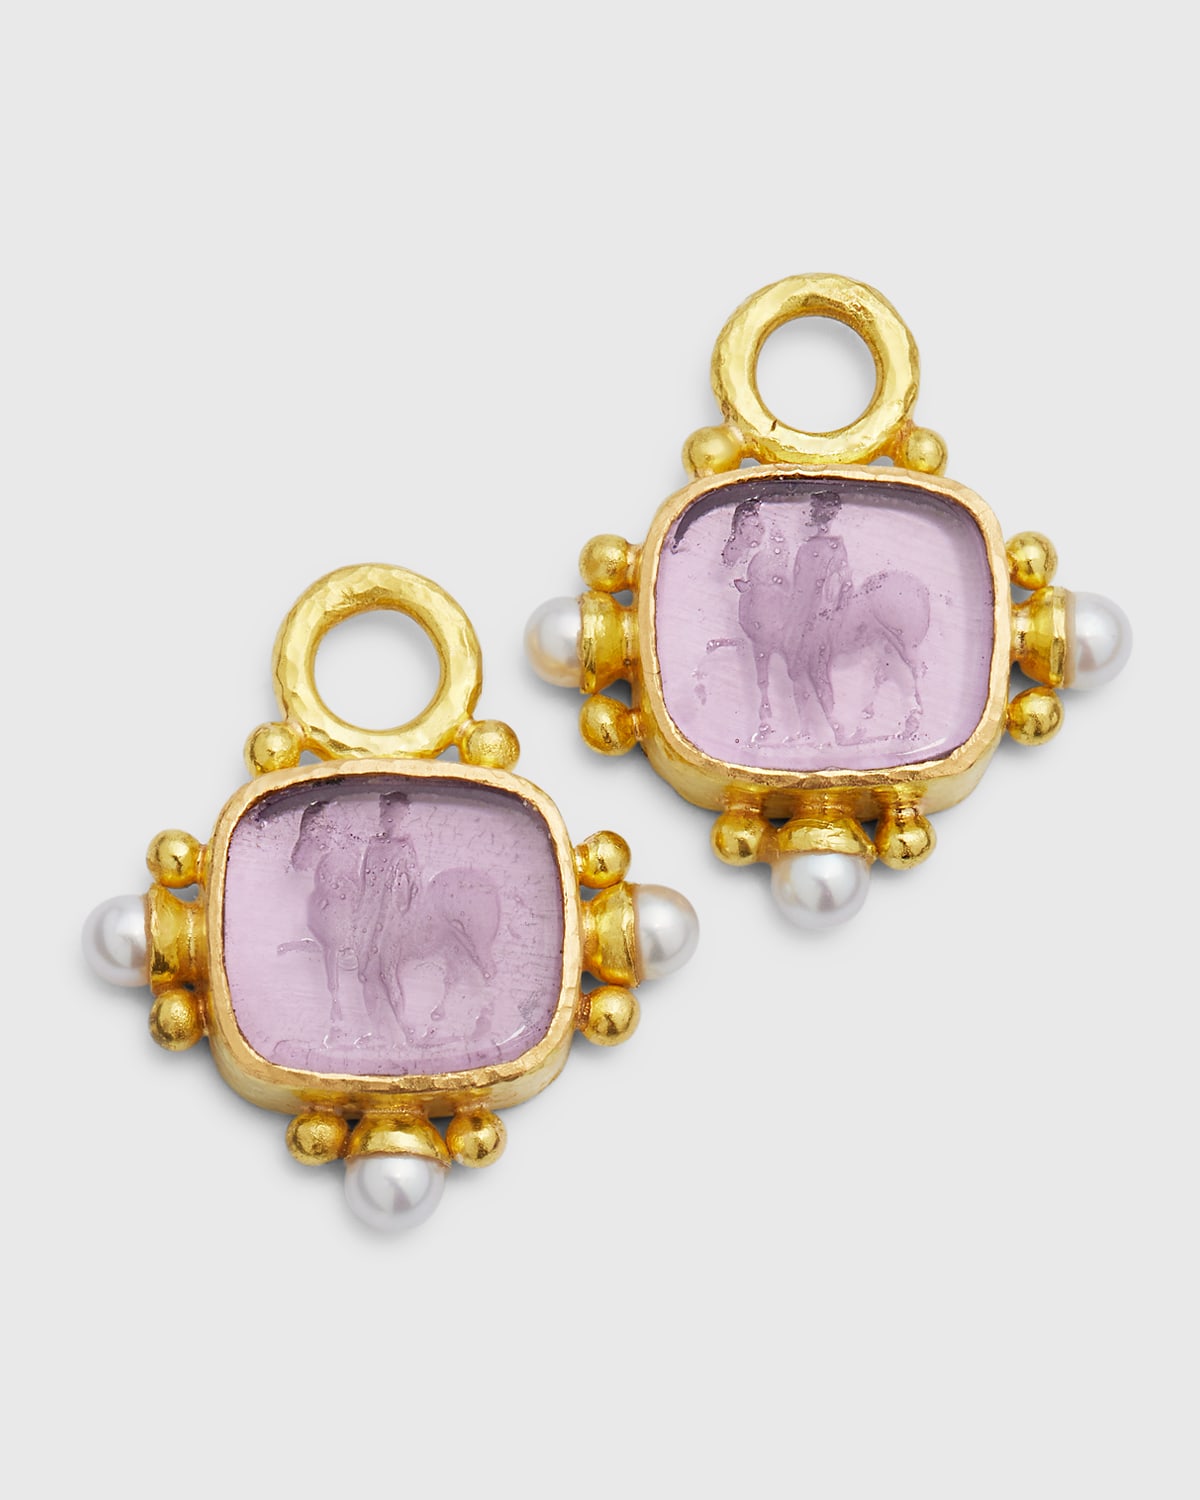 19k Venetian Glass and Pearl Earring Pendants